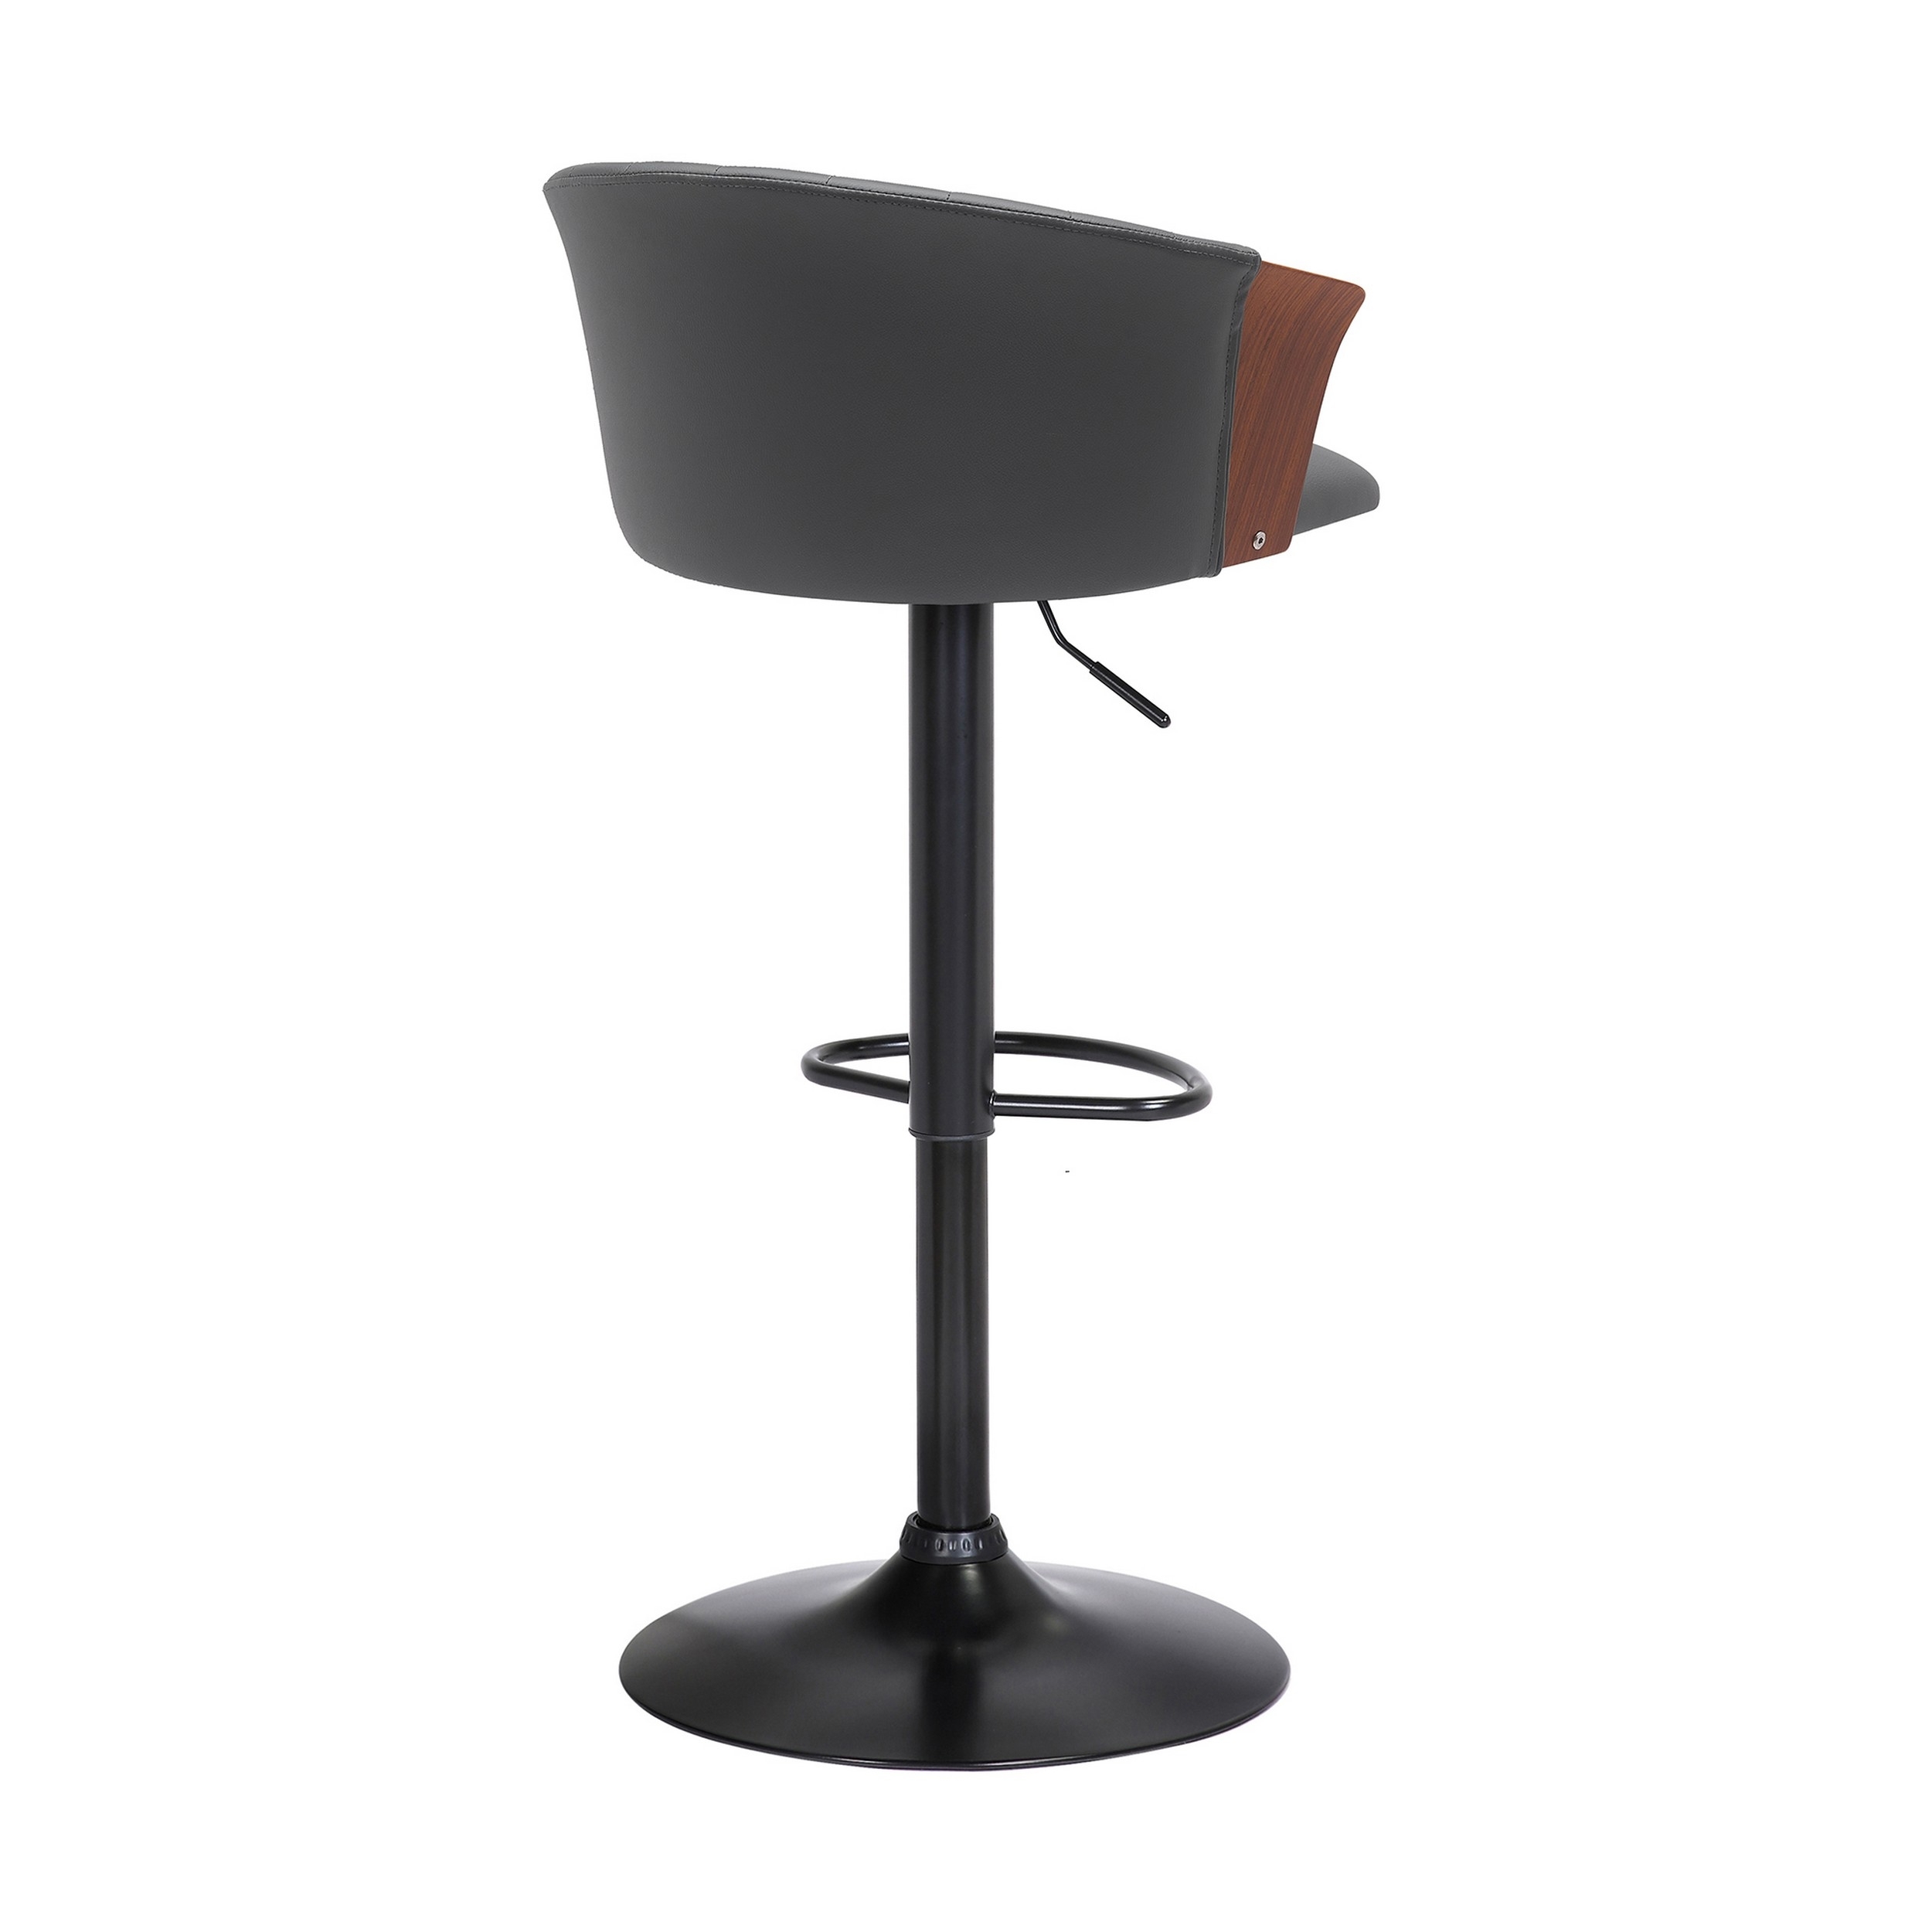 Liz 24-33 Inch Adjustable Height Swivel Barstool Chair, Gray Faux Leather - Saltoro Sherpi